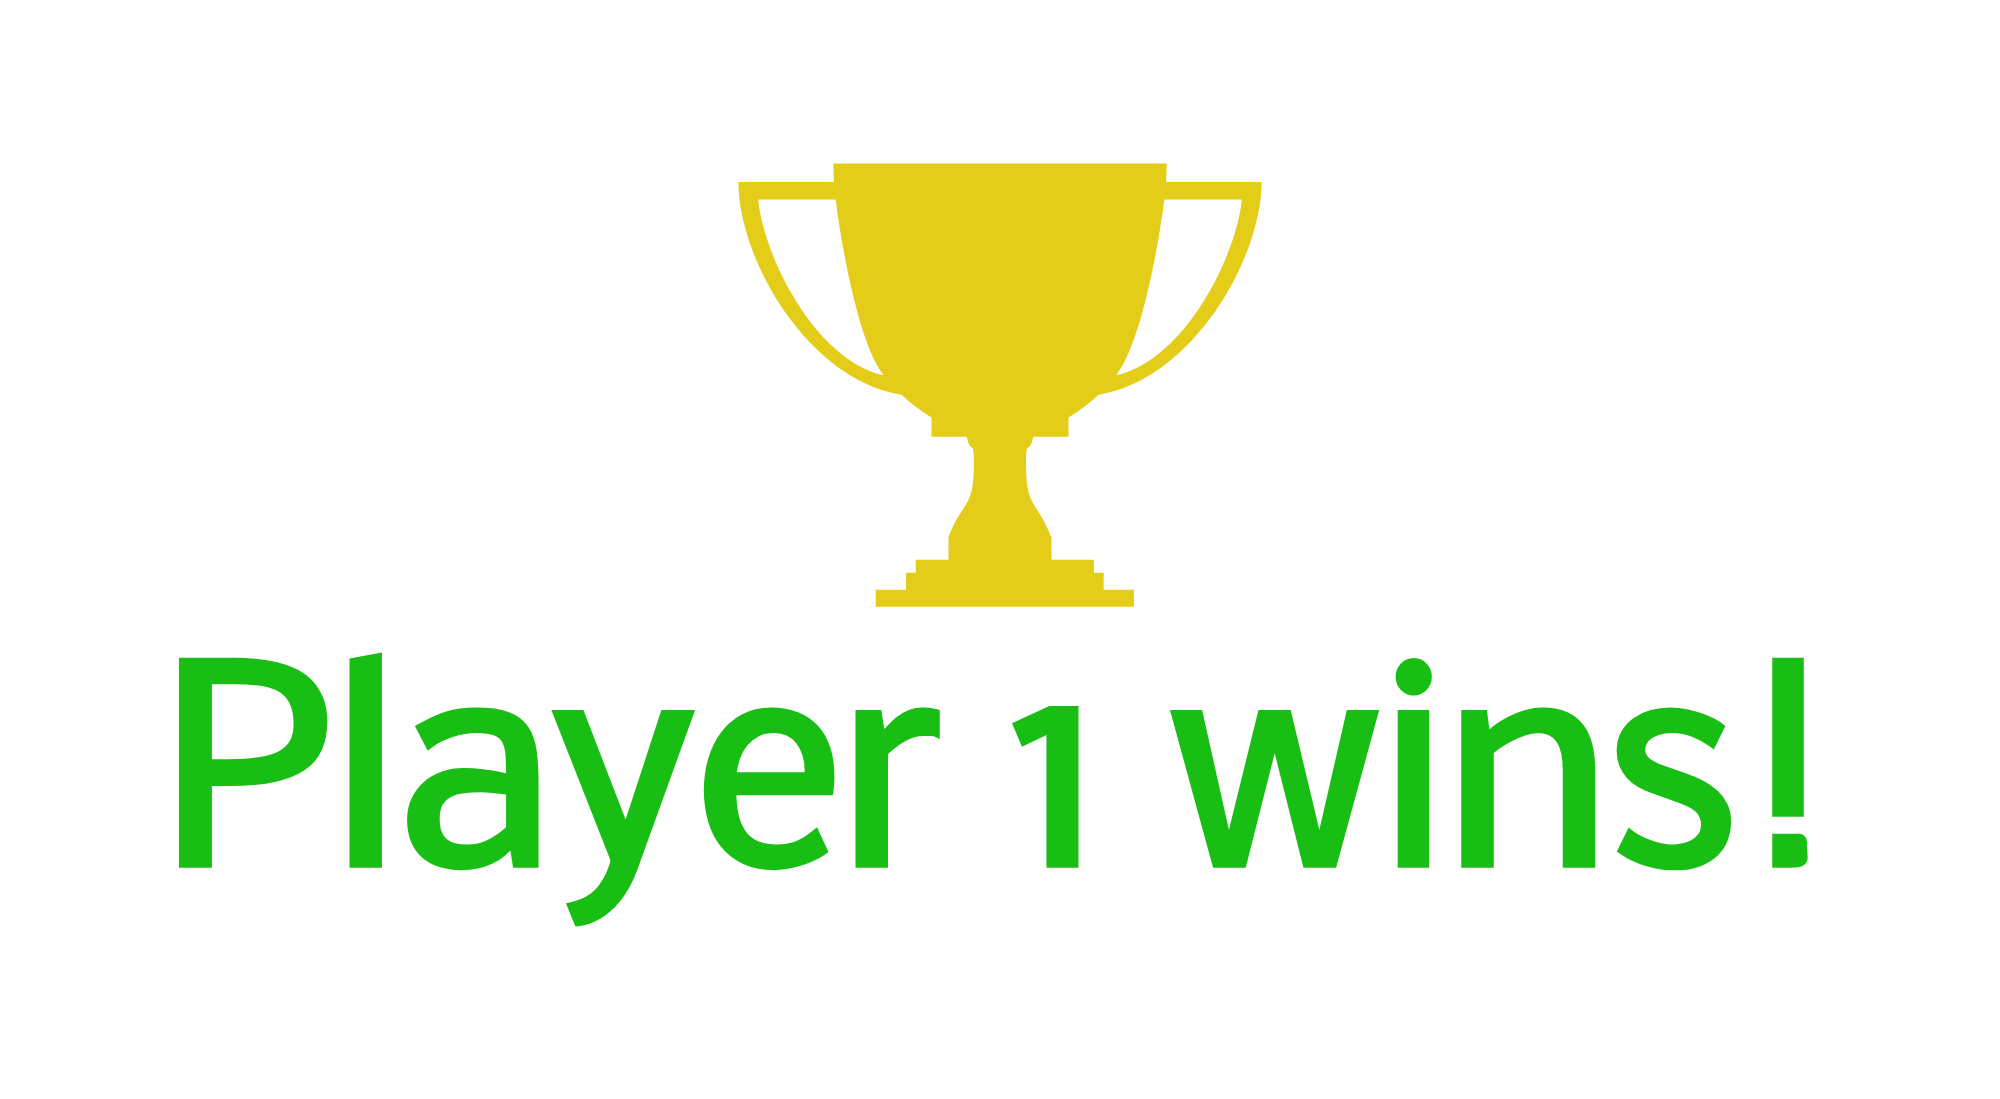 Player 1 wins!